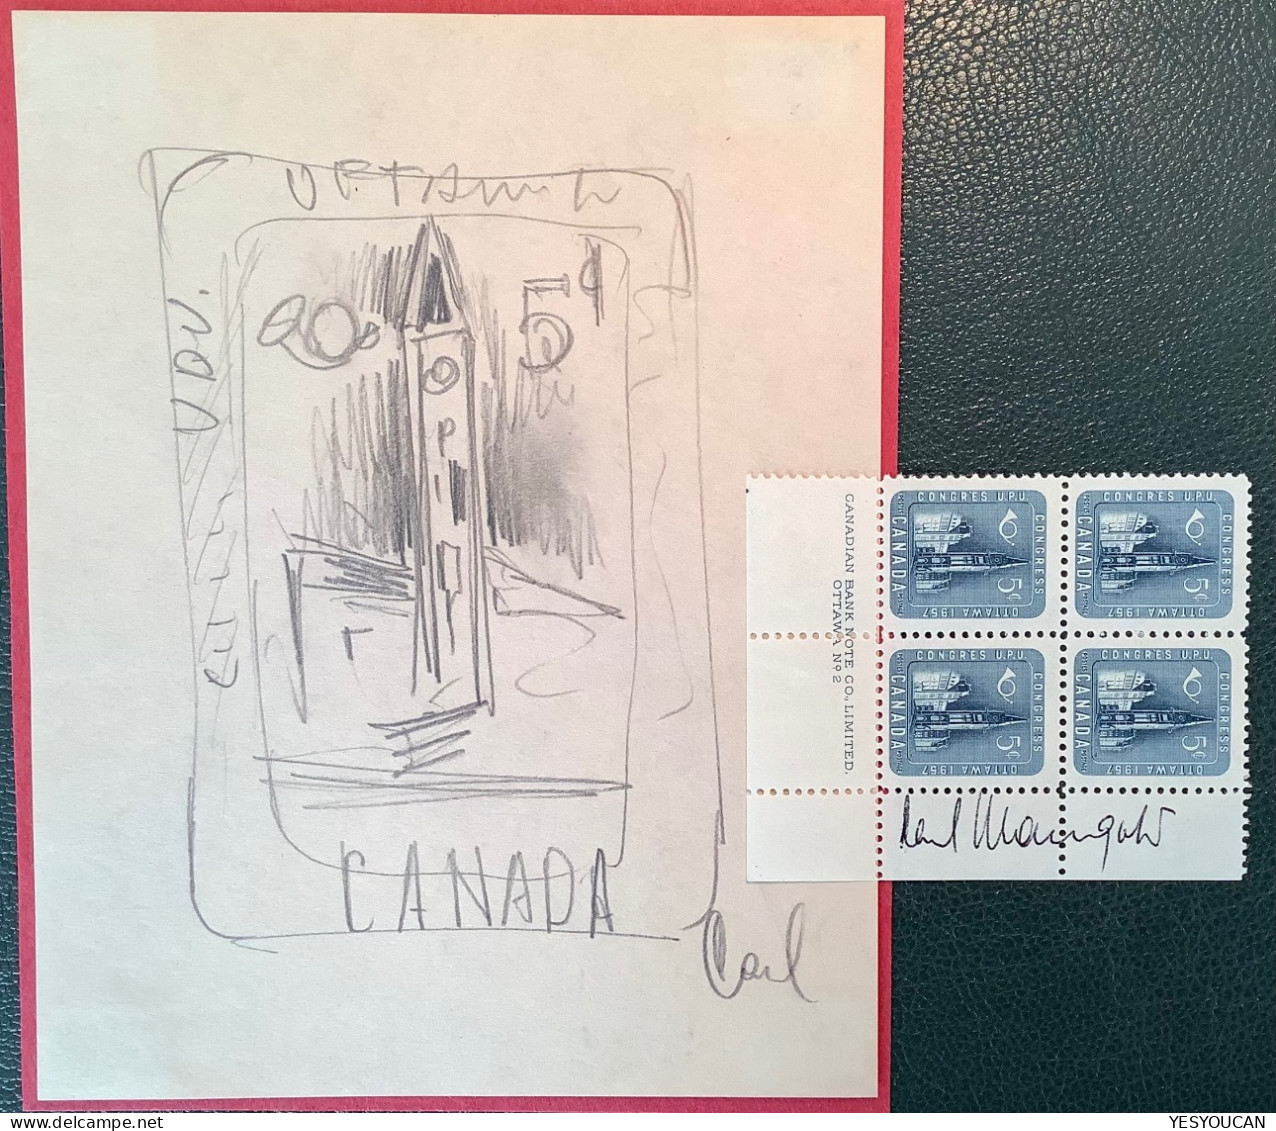 Canada Hand-drawn Essay 5c UPU CONGRESS OTTAWA 1957 Signed By Artist + Stamp, Ex Severin UPU Coll. Corinphila2012 (Proof - Unused Stamps